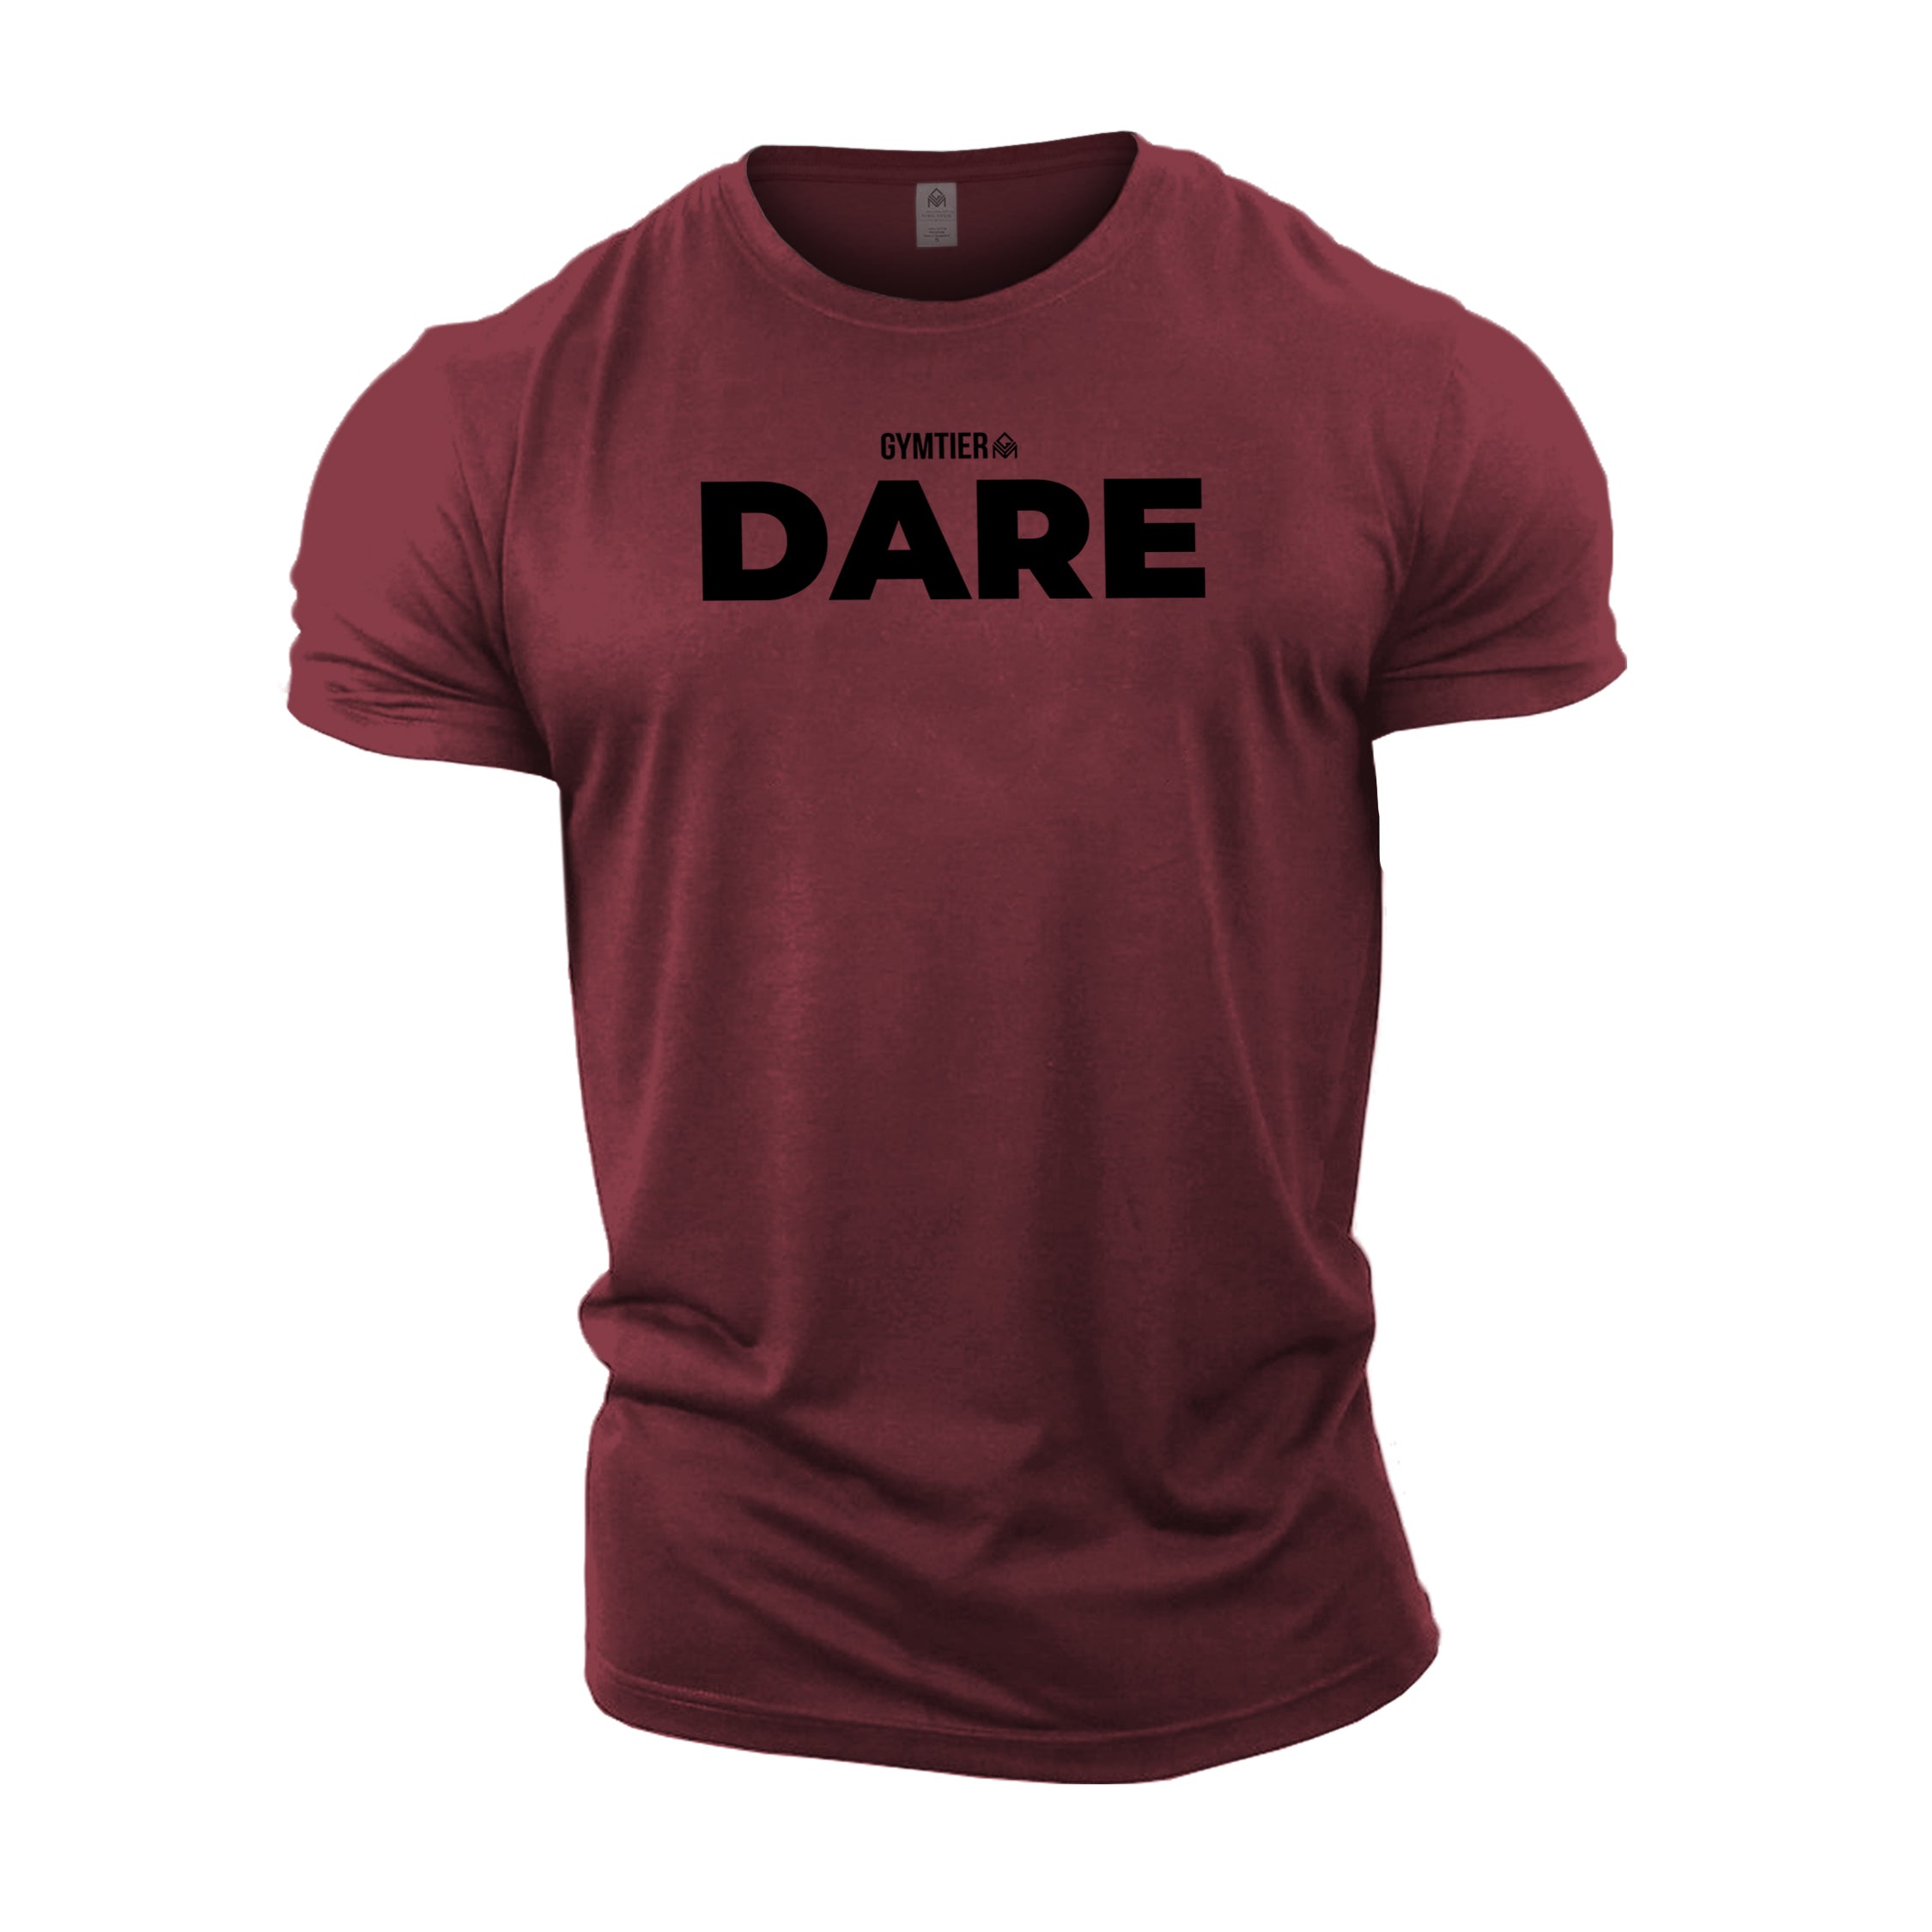 GYMTIER Dare T-Shirt